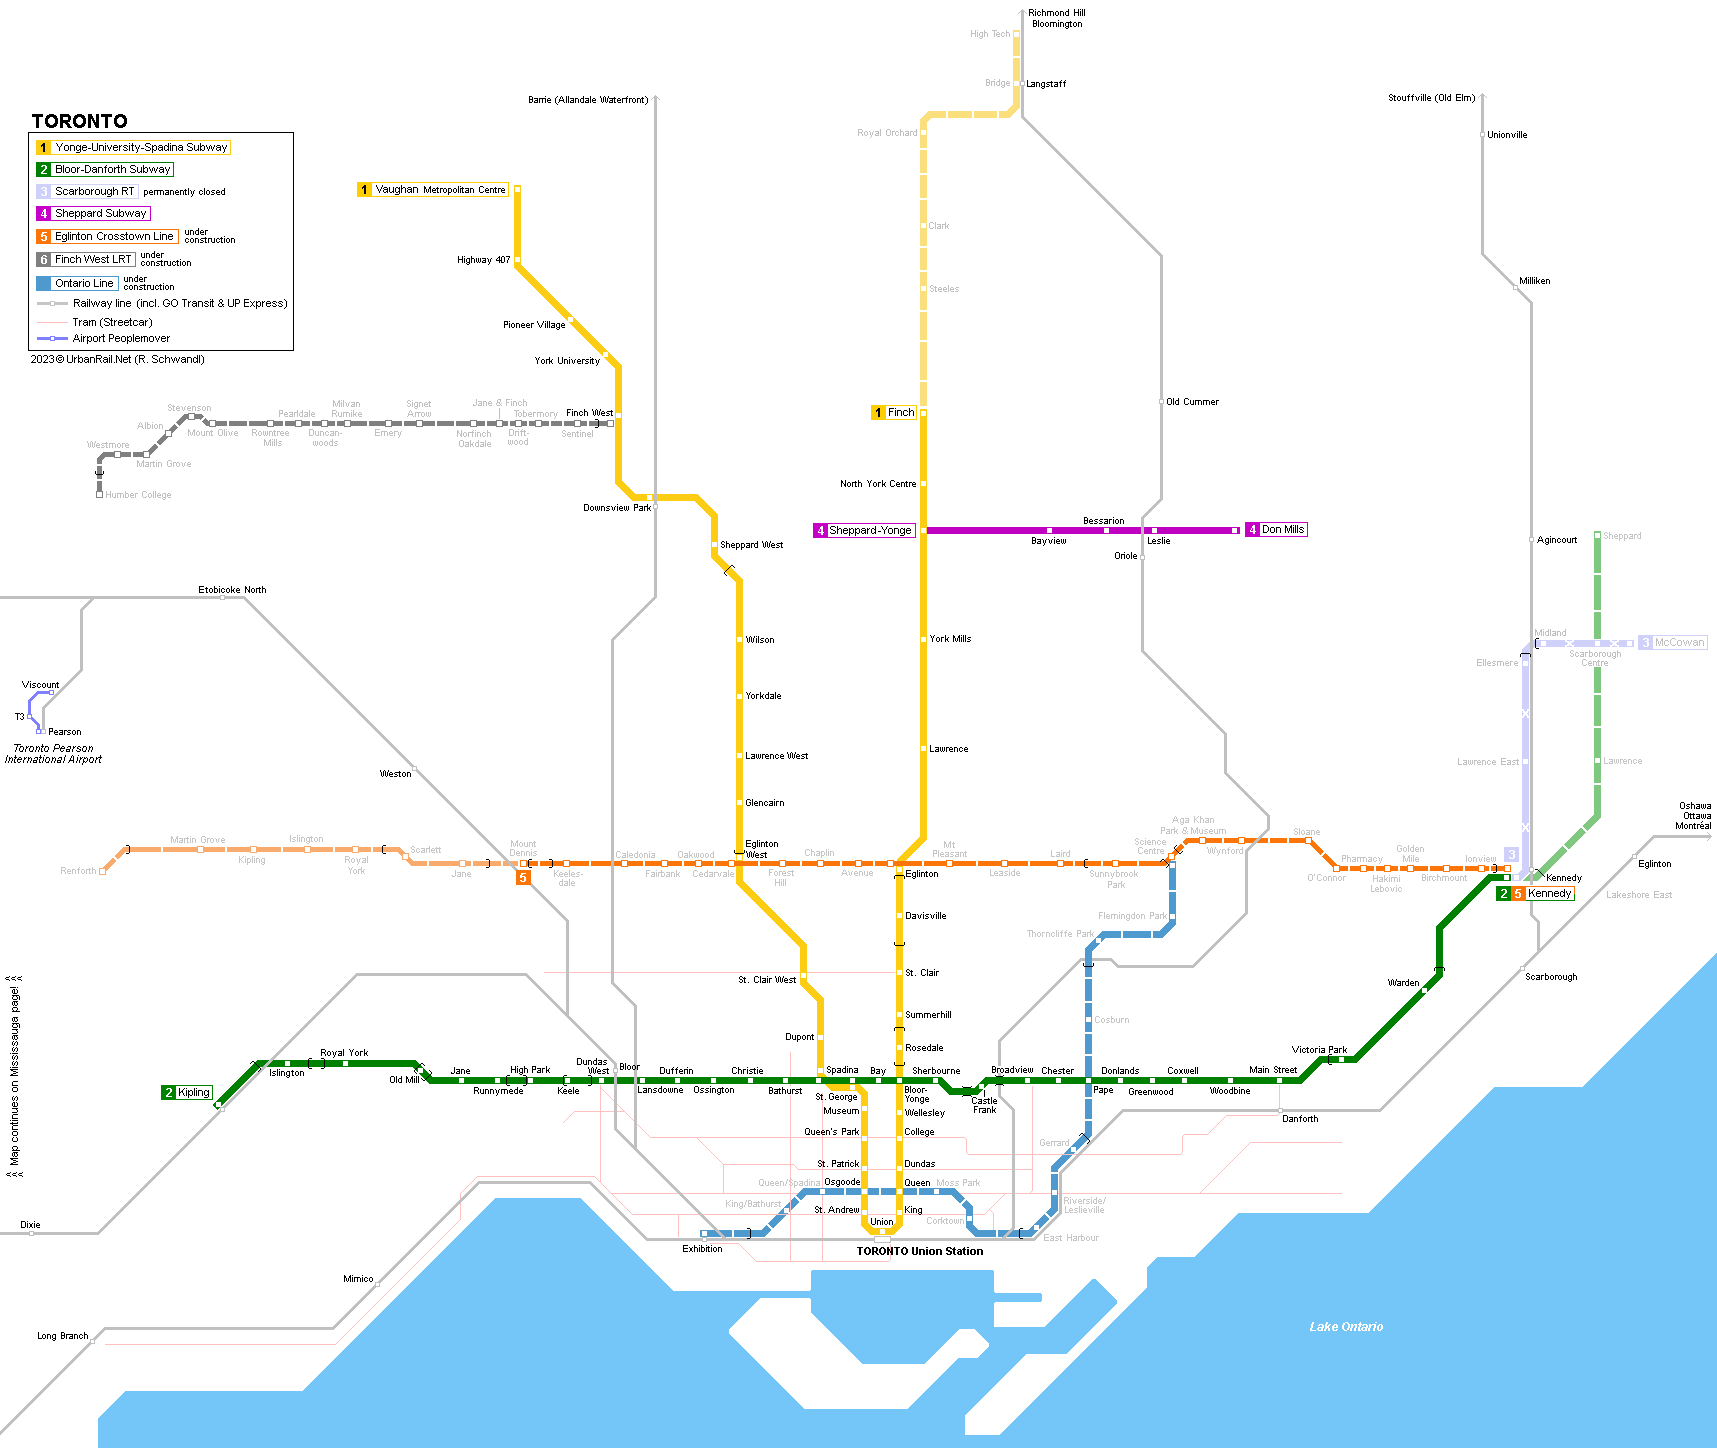 Toronto Subway & LRT map